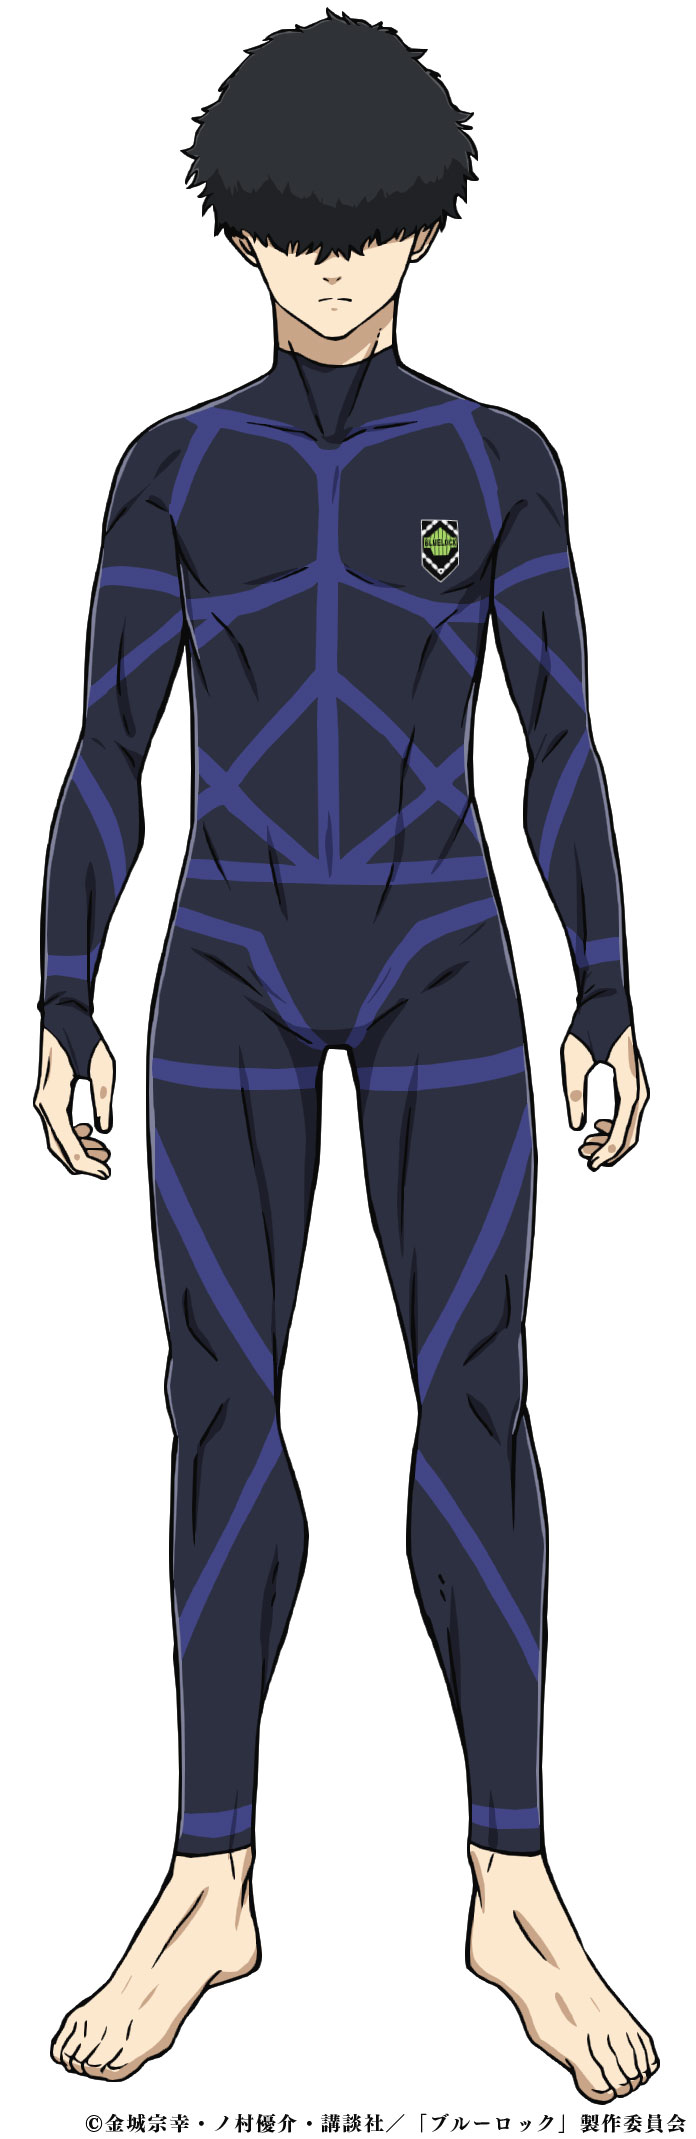 BLUELOCK Ikki Niko character design